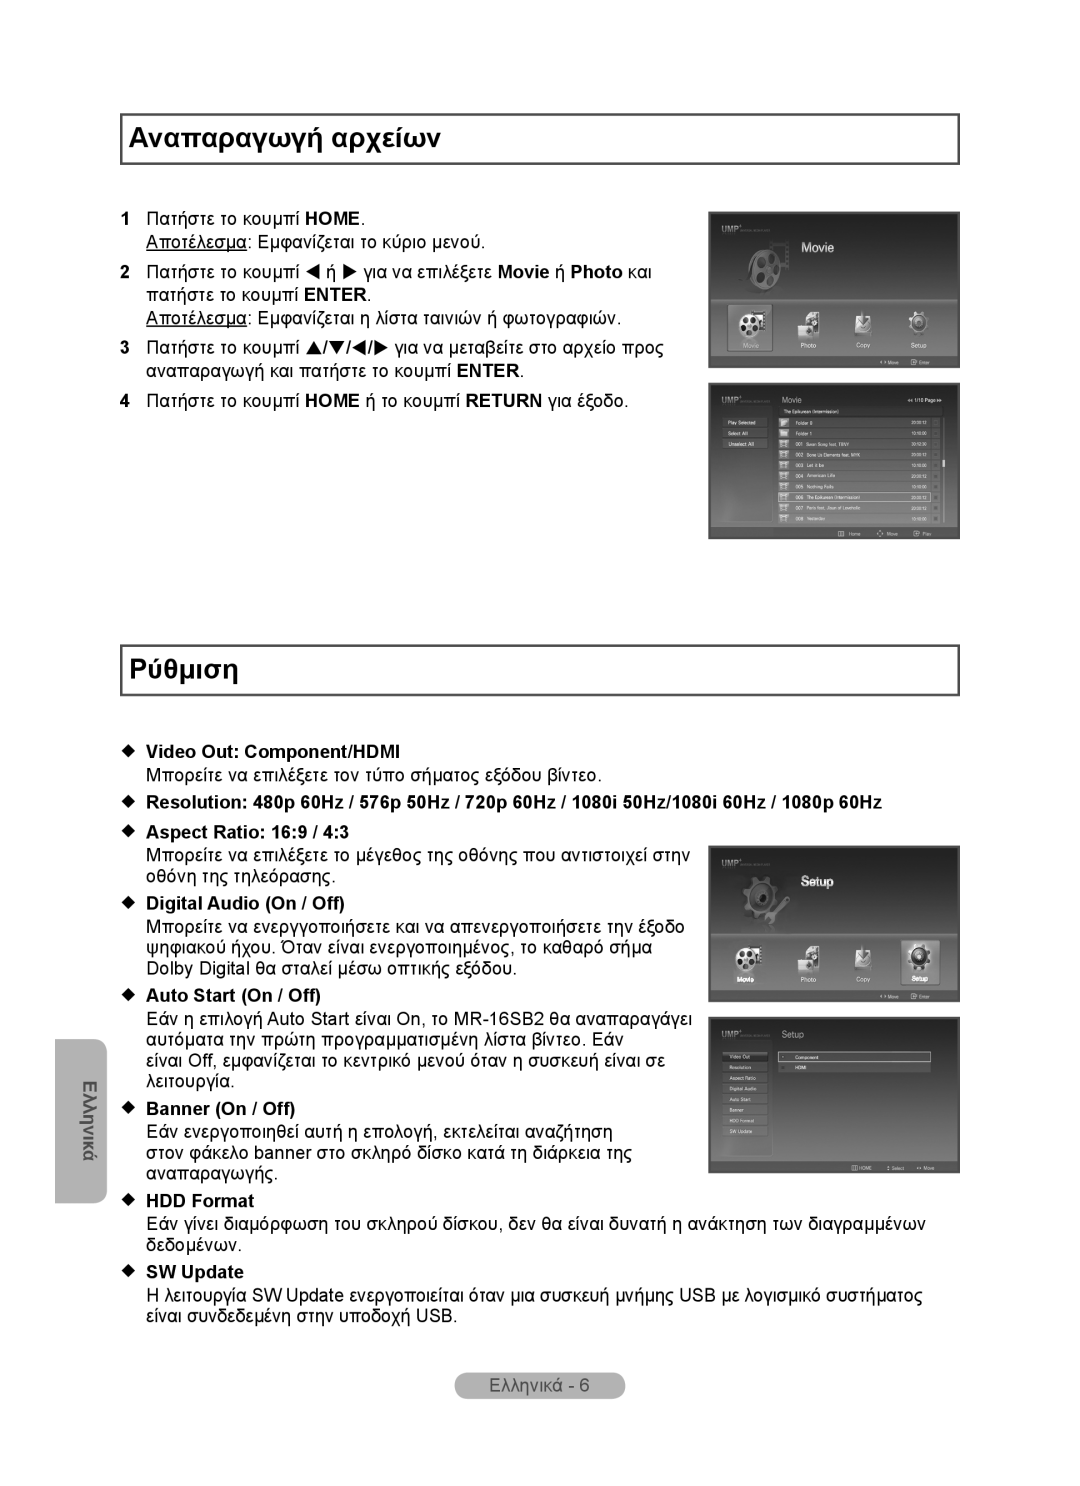 Samsung MR-16SB2 Αναπαραγωγή αρχείων, Ρύθμιση, Ελληνικά,  Video Out Component/HDMI,  Aspect Ratio 169,  Banner On / Off 